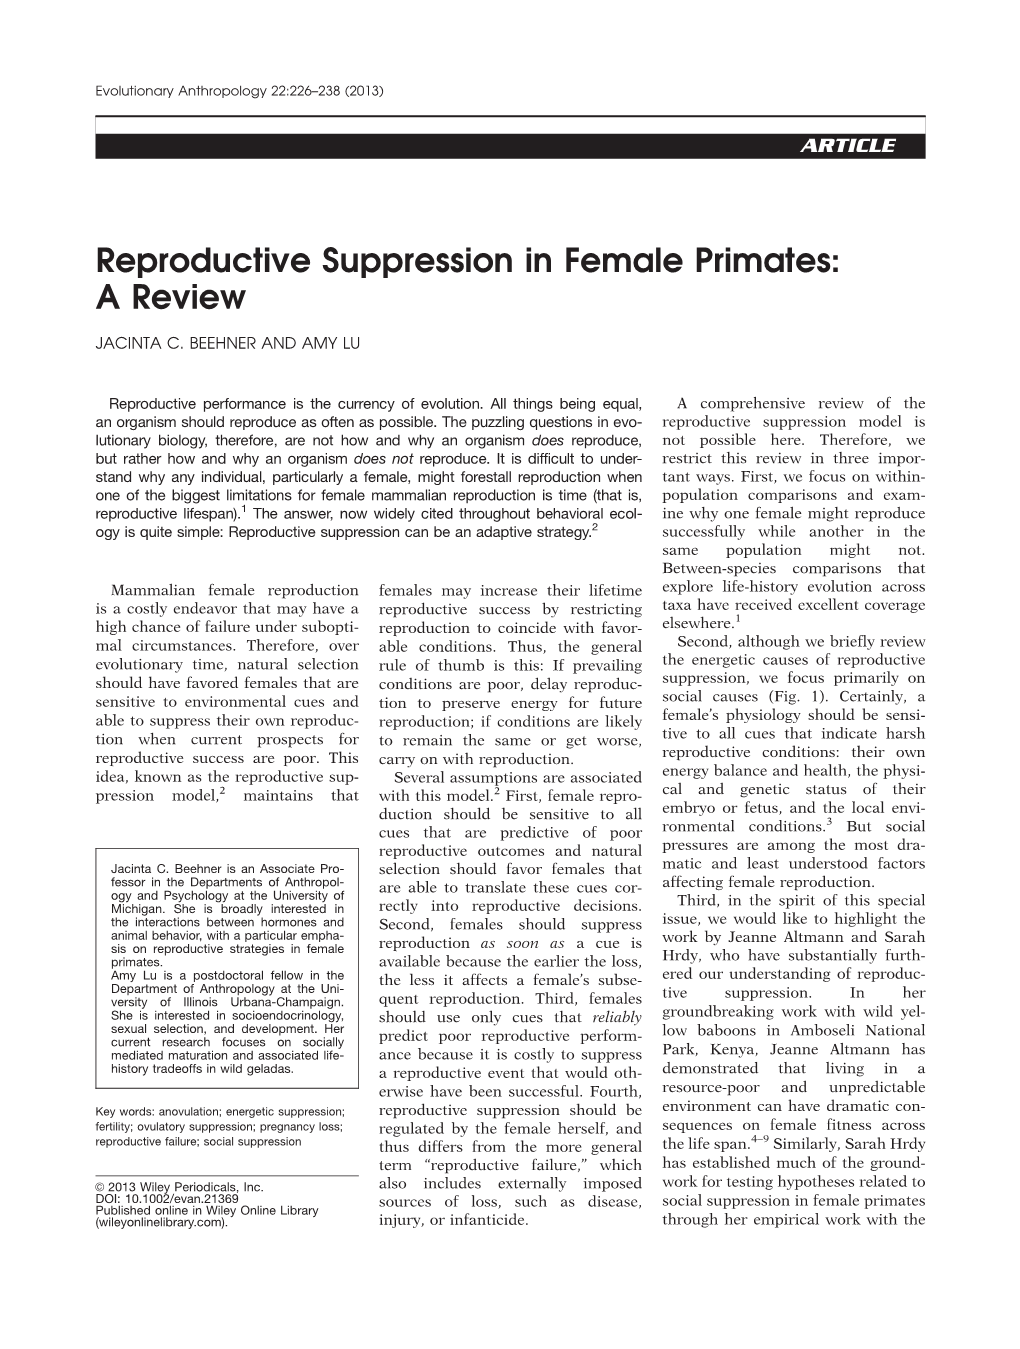 Reproductive Suppression in Female Primates: a Review